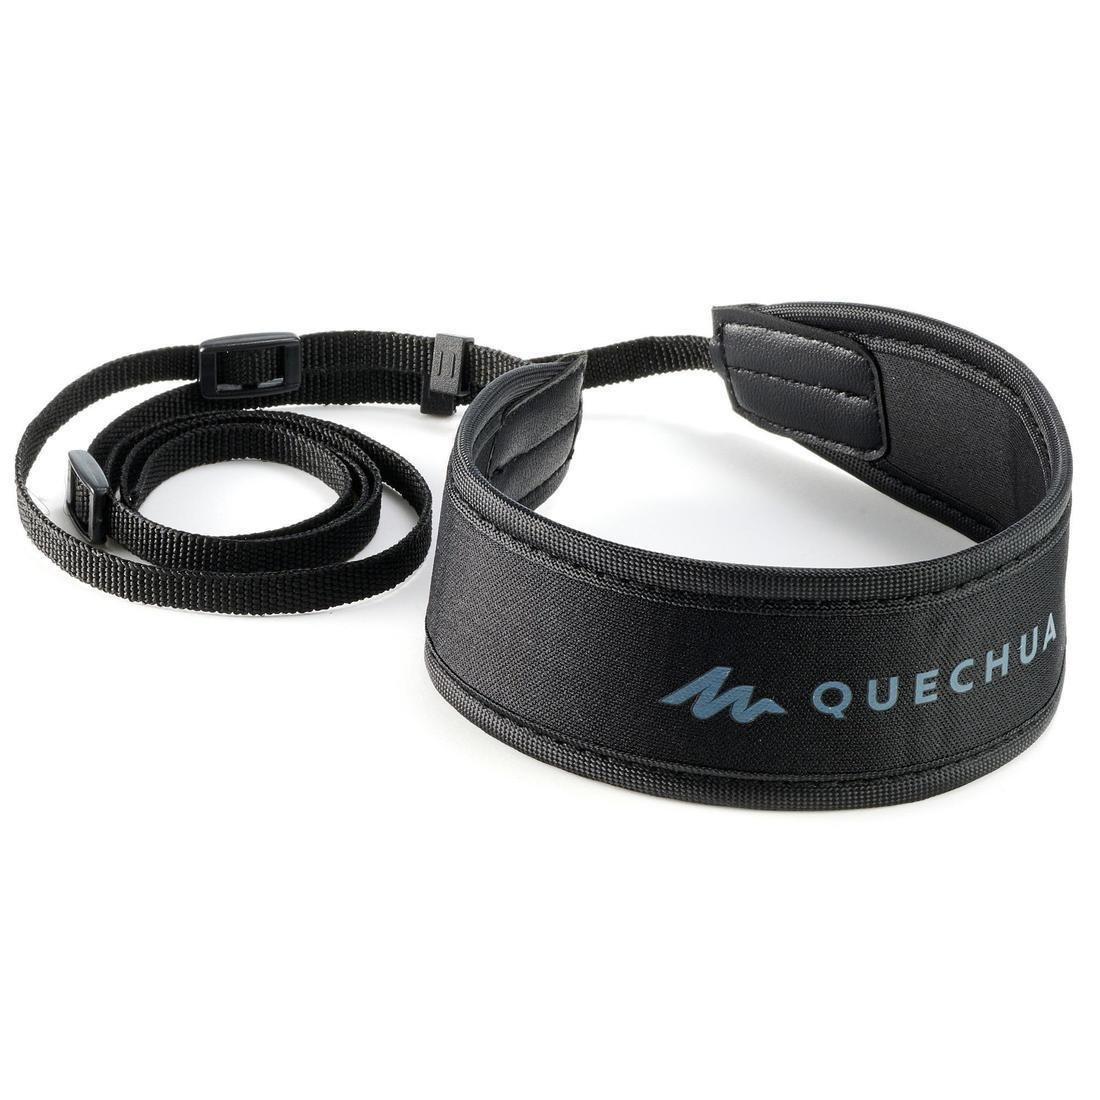 QUECHUA - Unisex Fixed Focus Binoculars - X10 Magnification, Grey